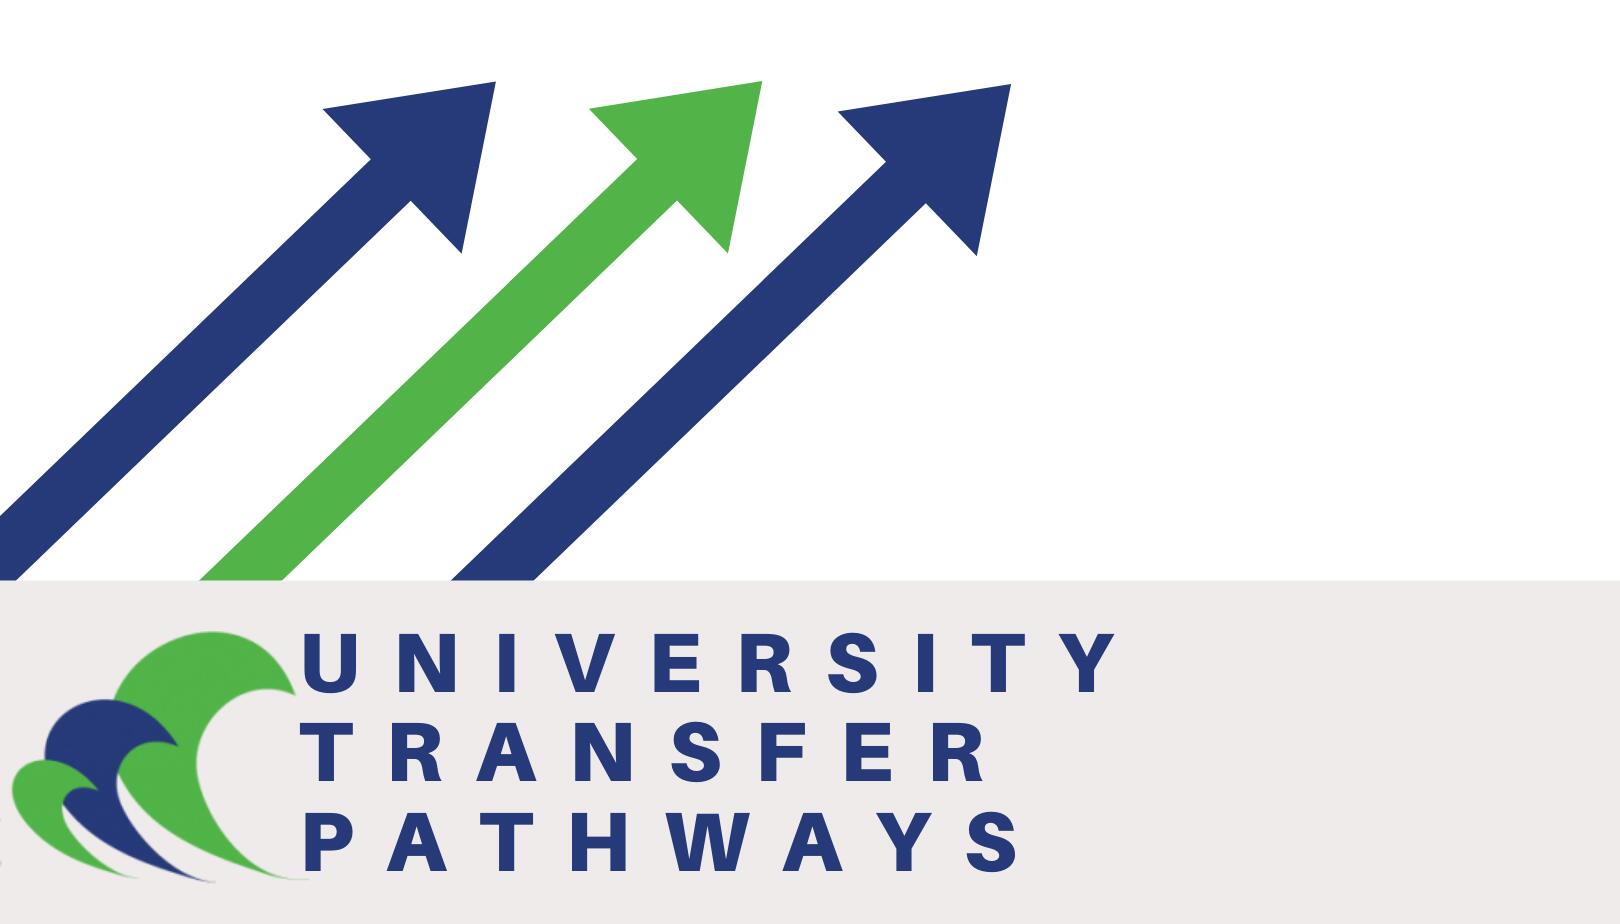 University Transfer Pathways